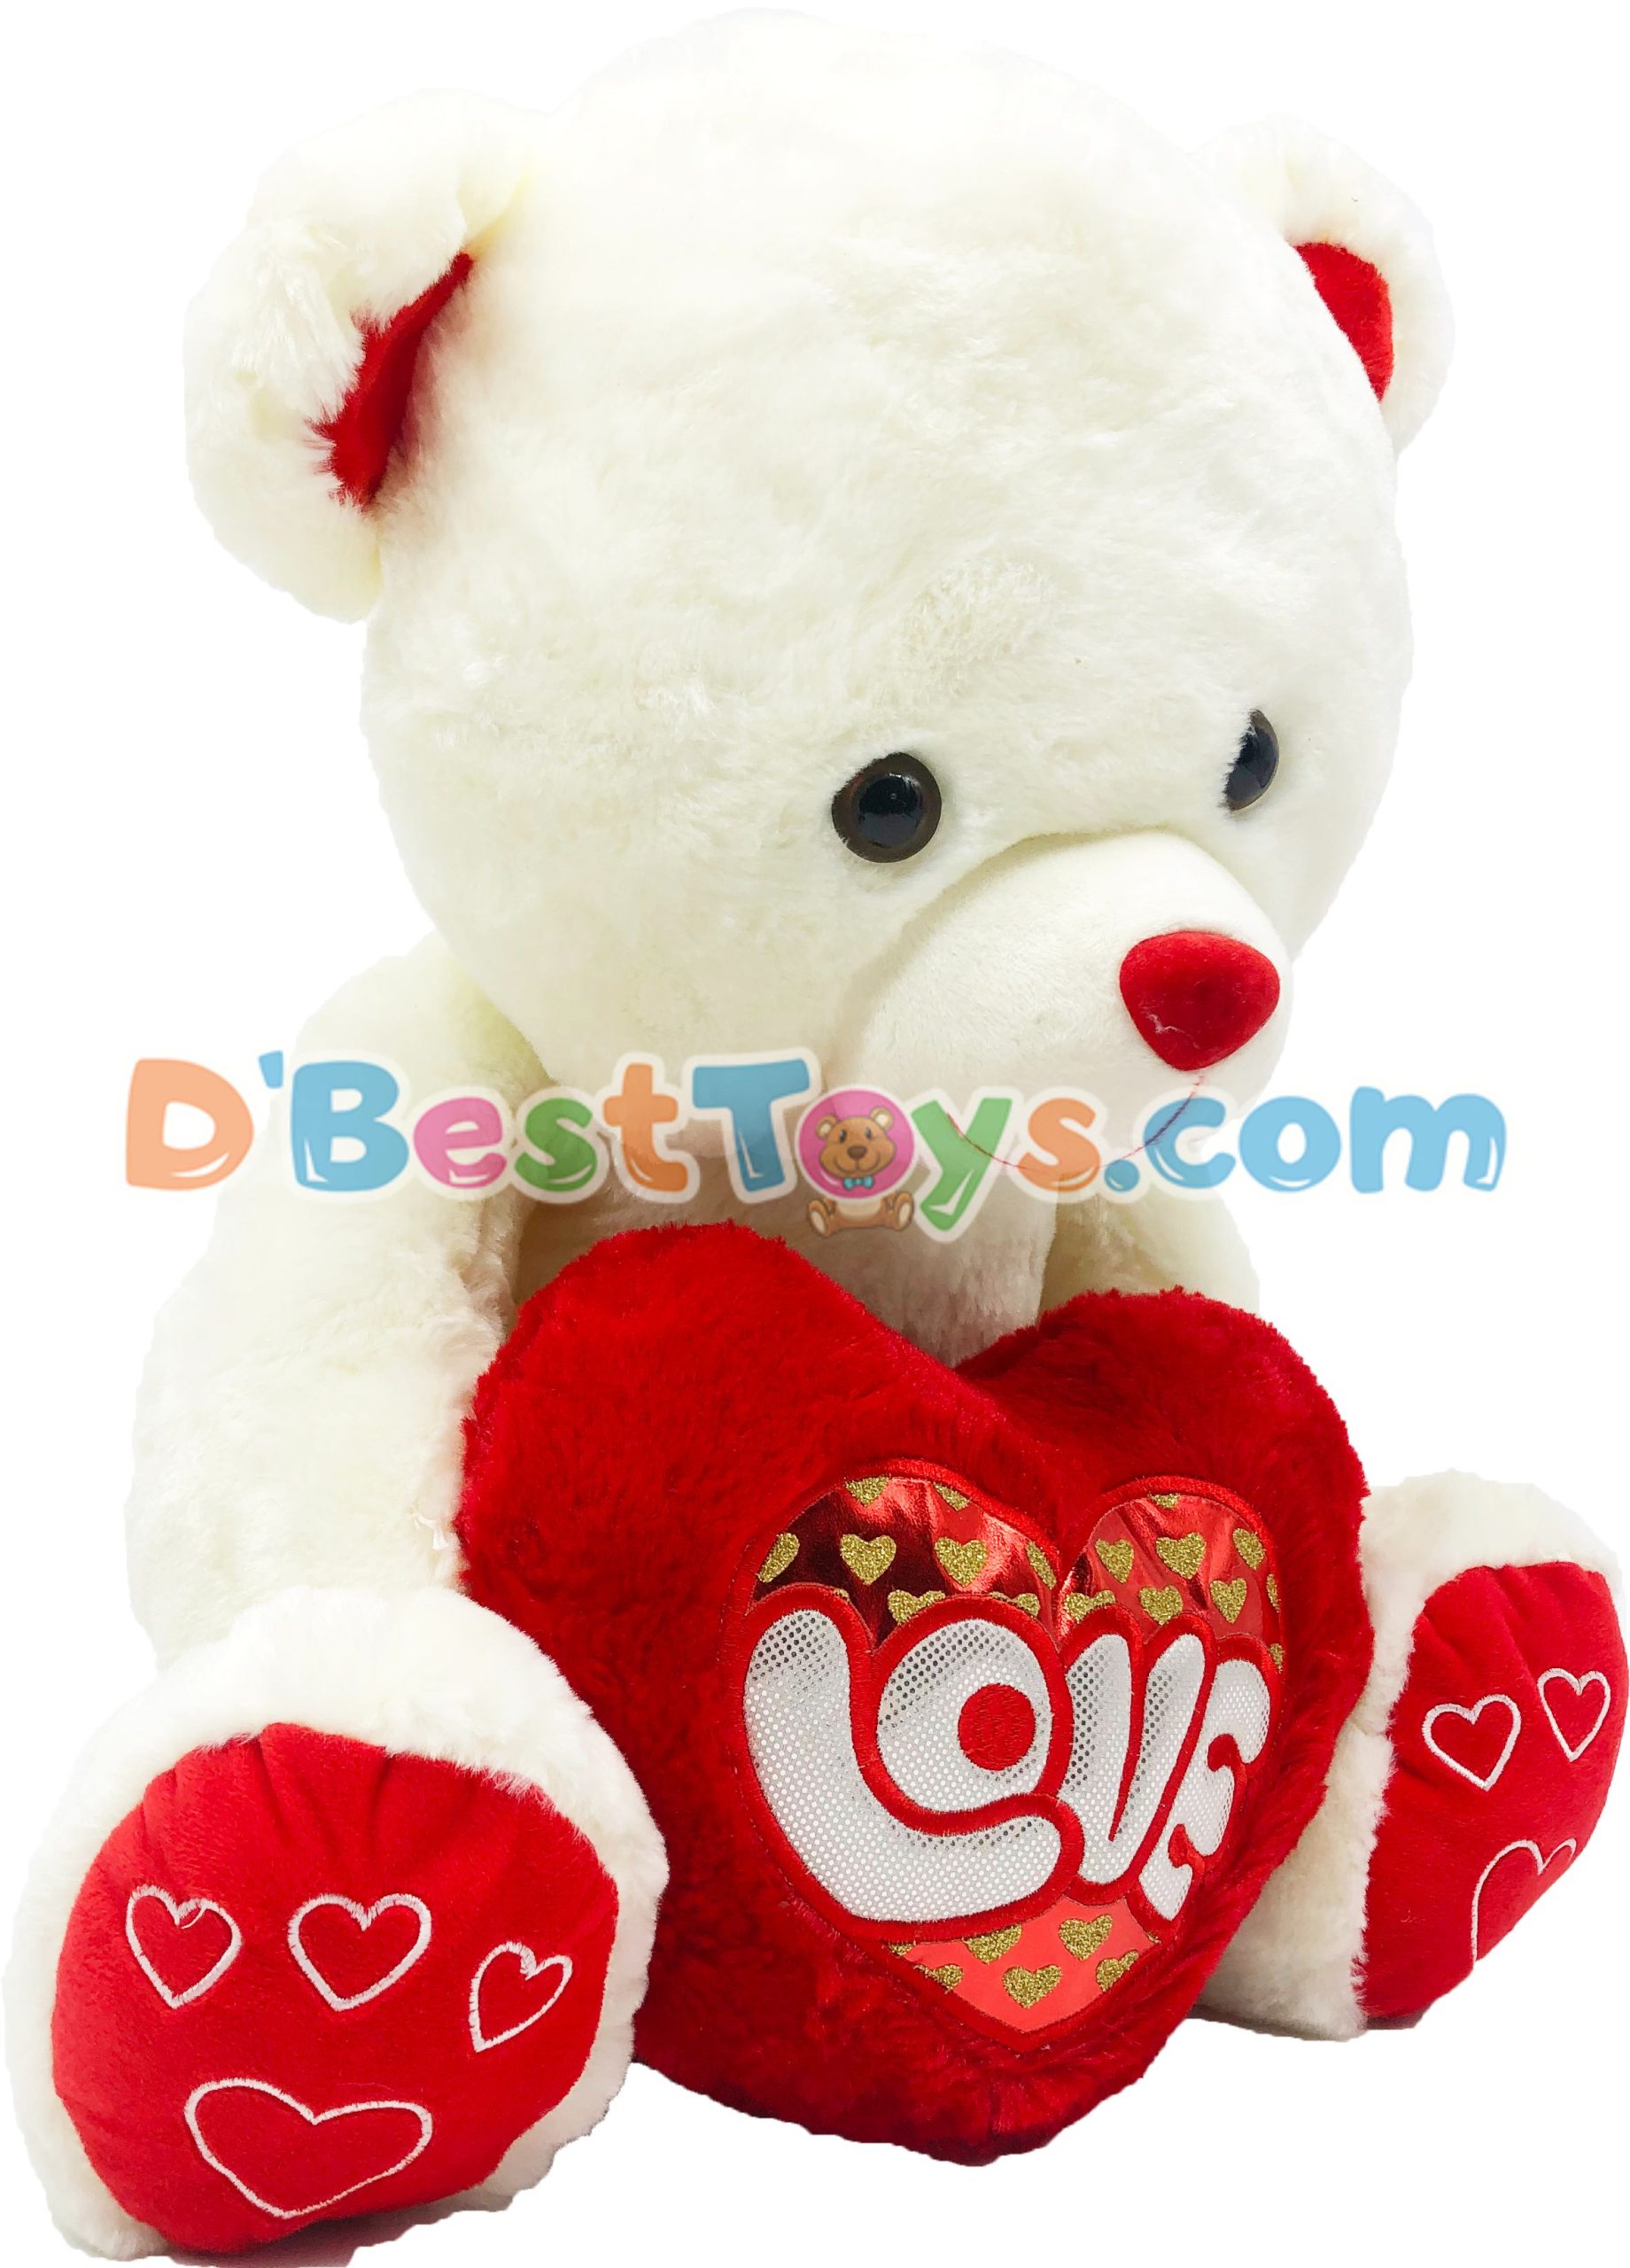 red heart plush teddy bear2